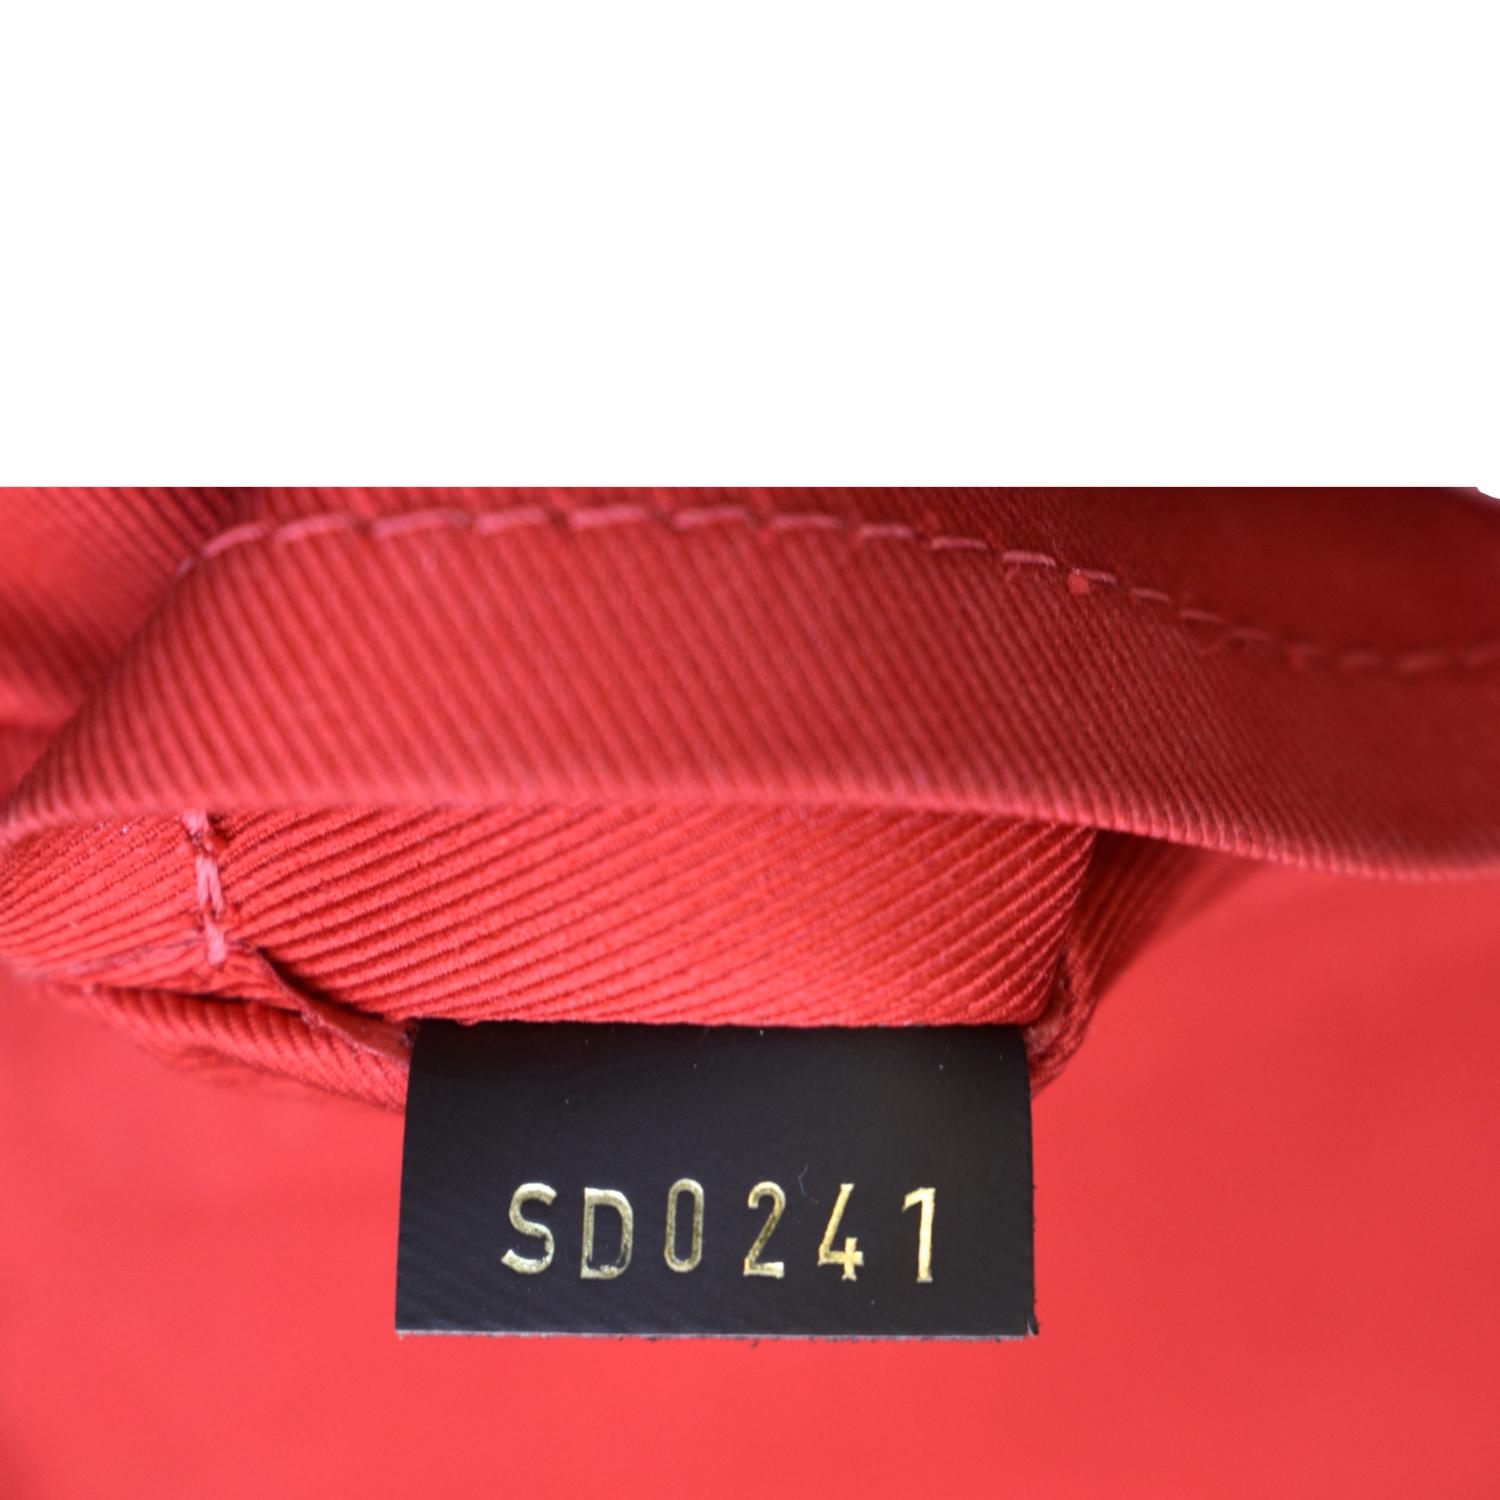 Louis Vuitton Croisette Handbag Damier Brown 396121